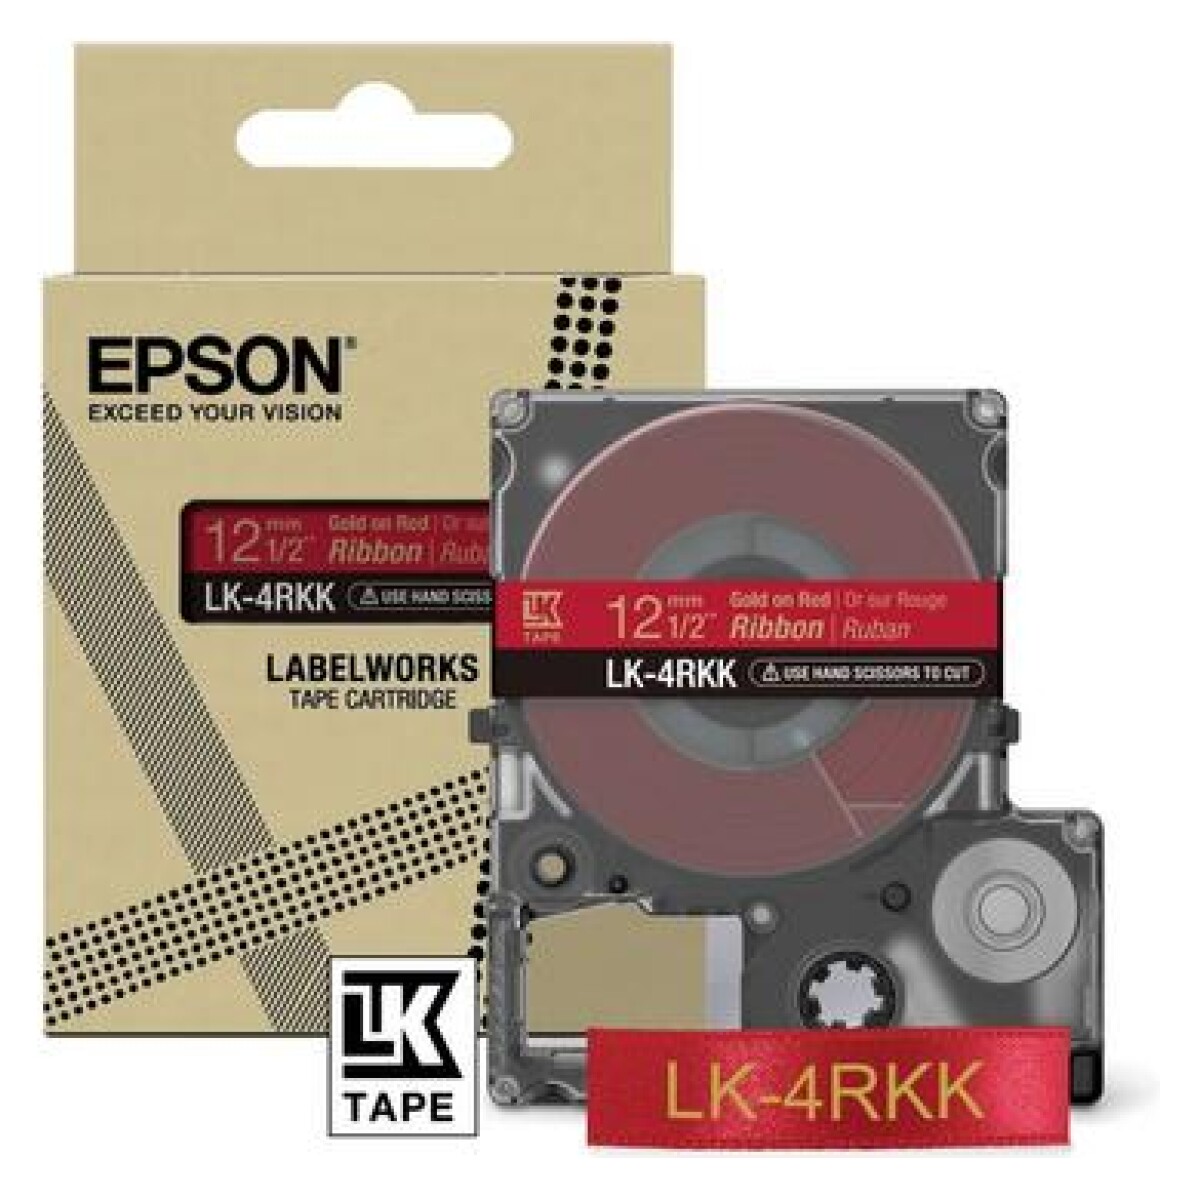 Epson LK-4RKK - 12 mm. Satijn Band - Goud op Rood